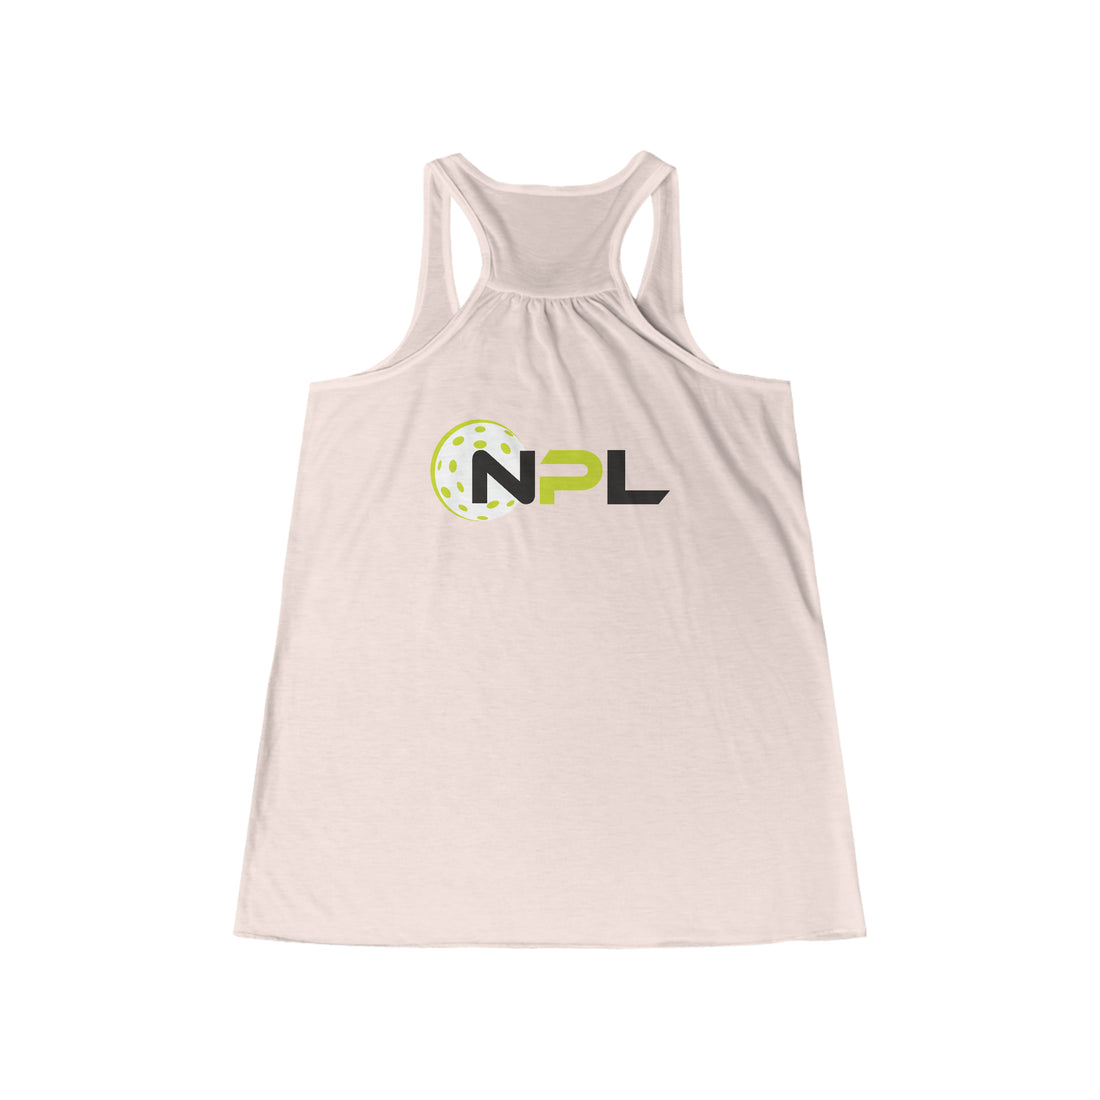 "NPL™ Women's Flowy Racerback Tank: Show Your Support in Style!"